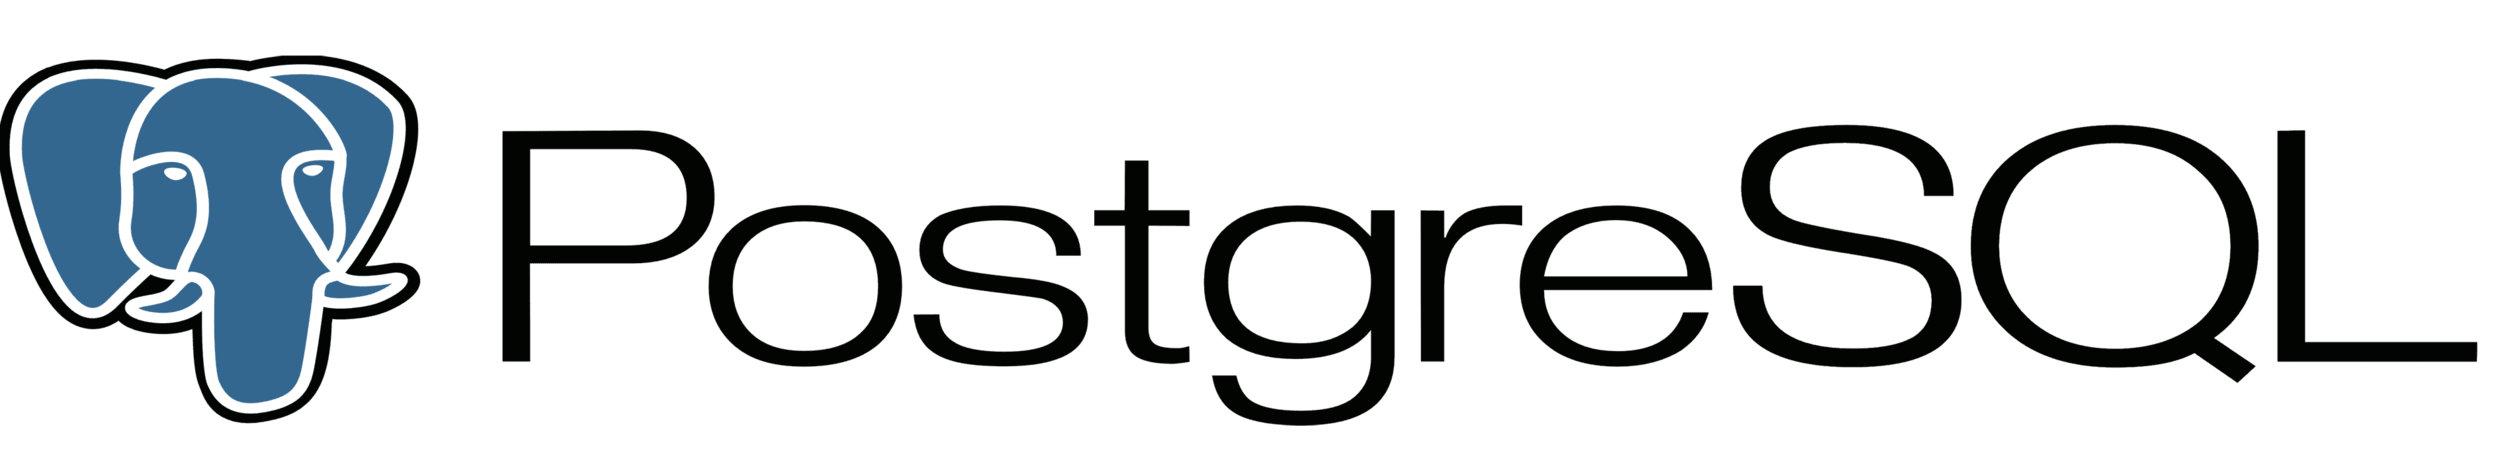 PostgreSQL-Logo.png